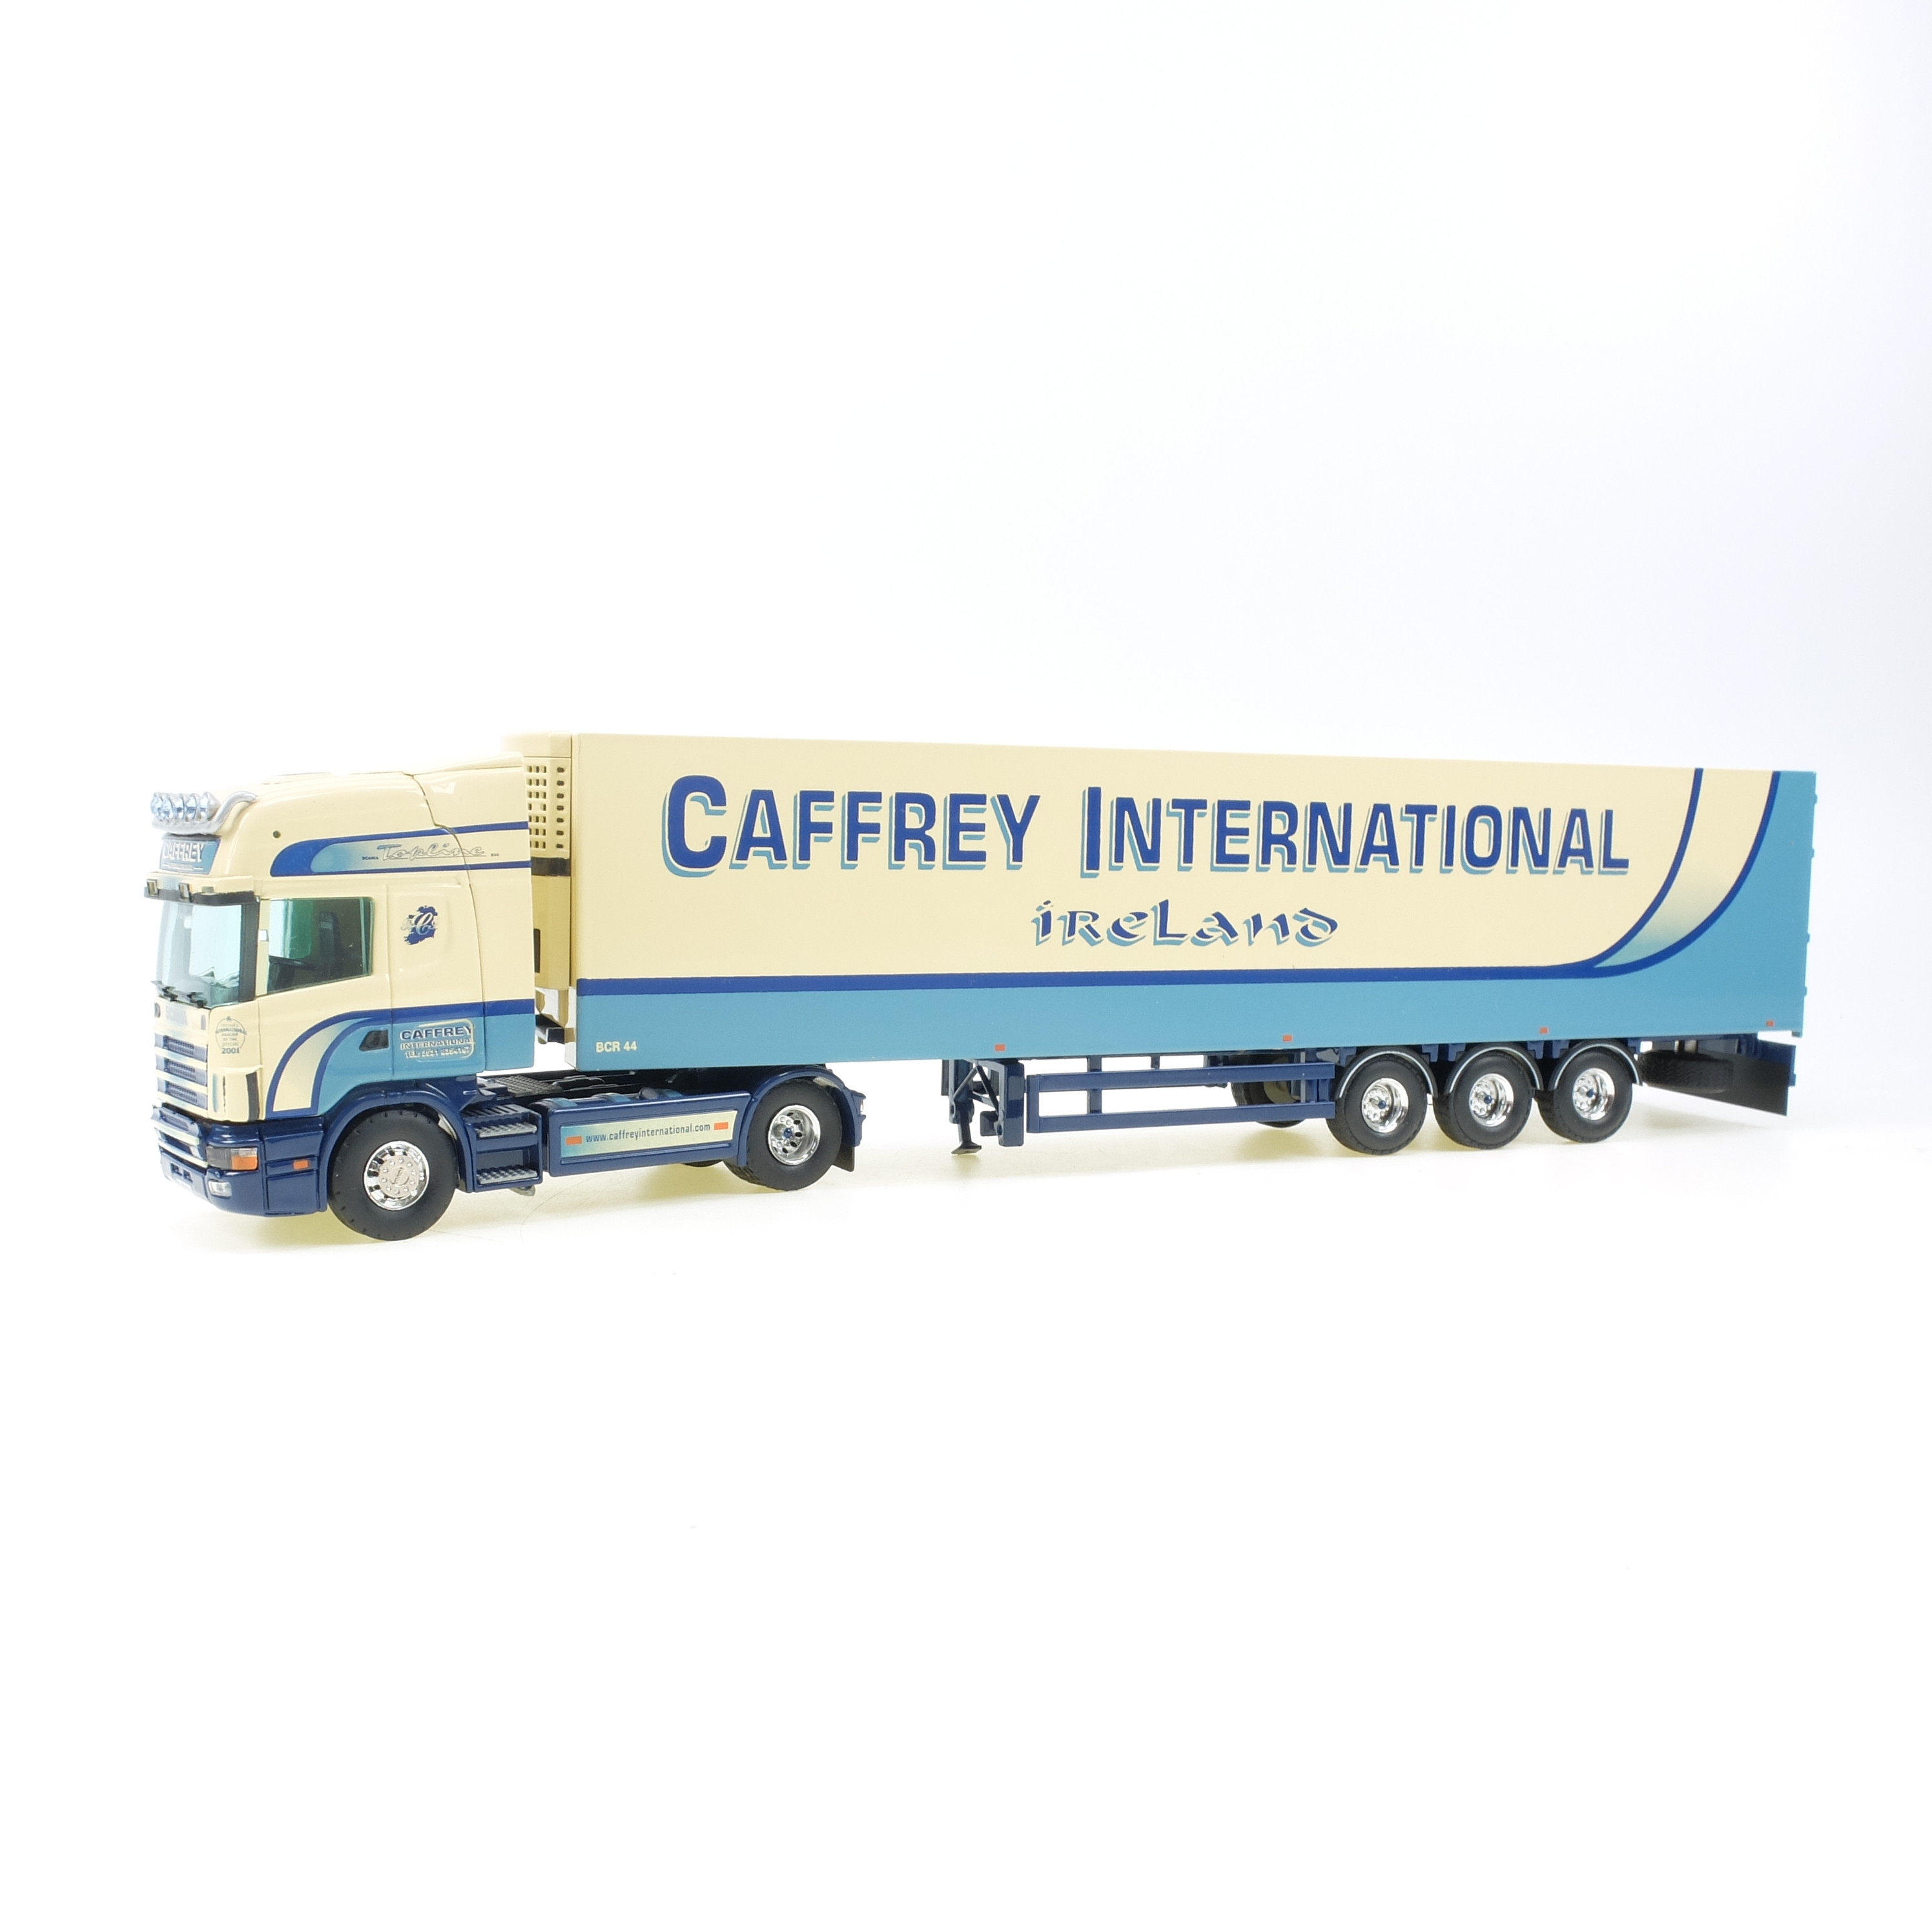 Scania kuehlauflieger Cafferey International